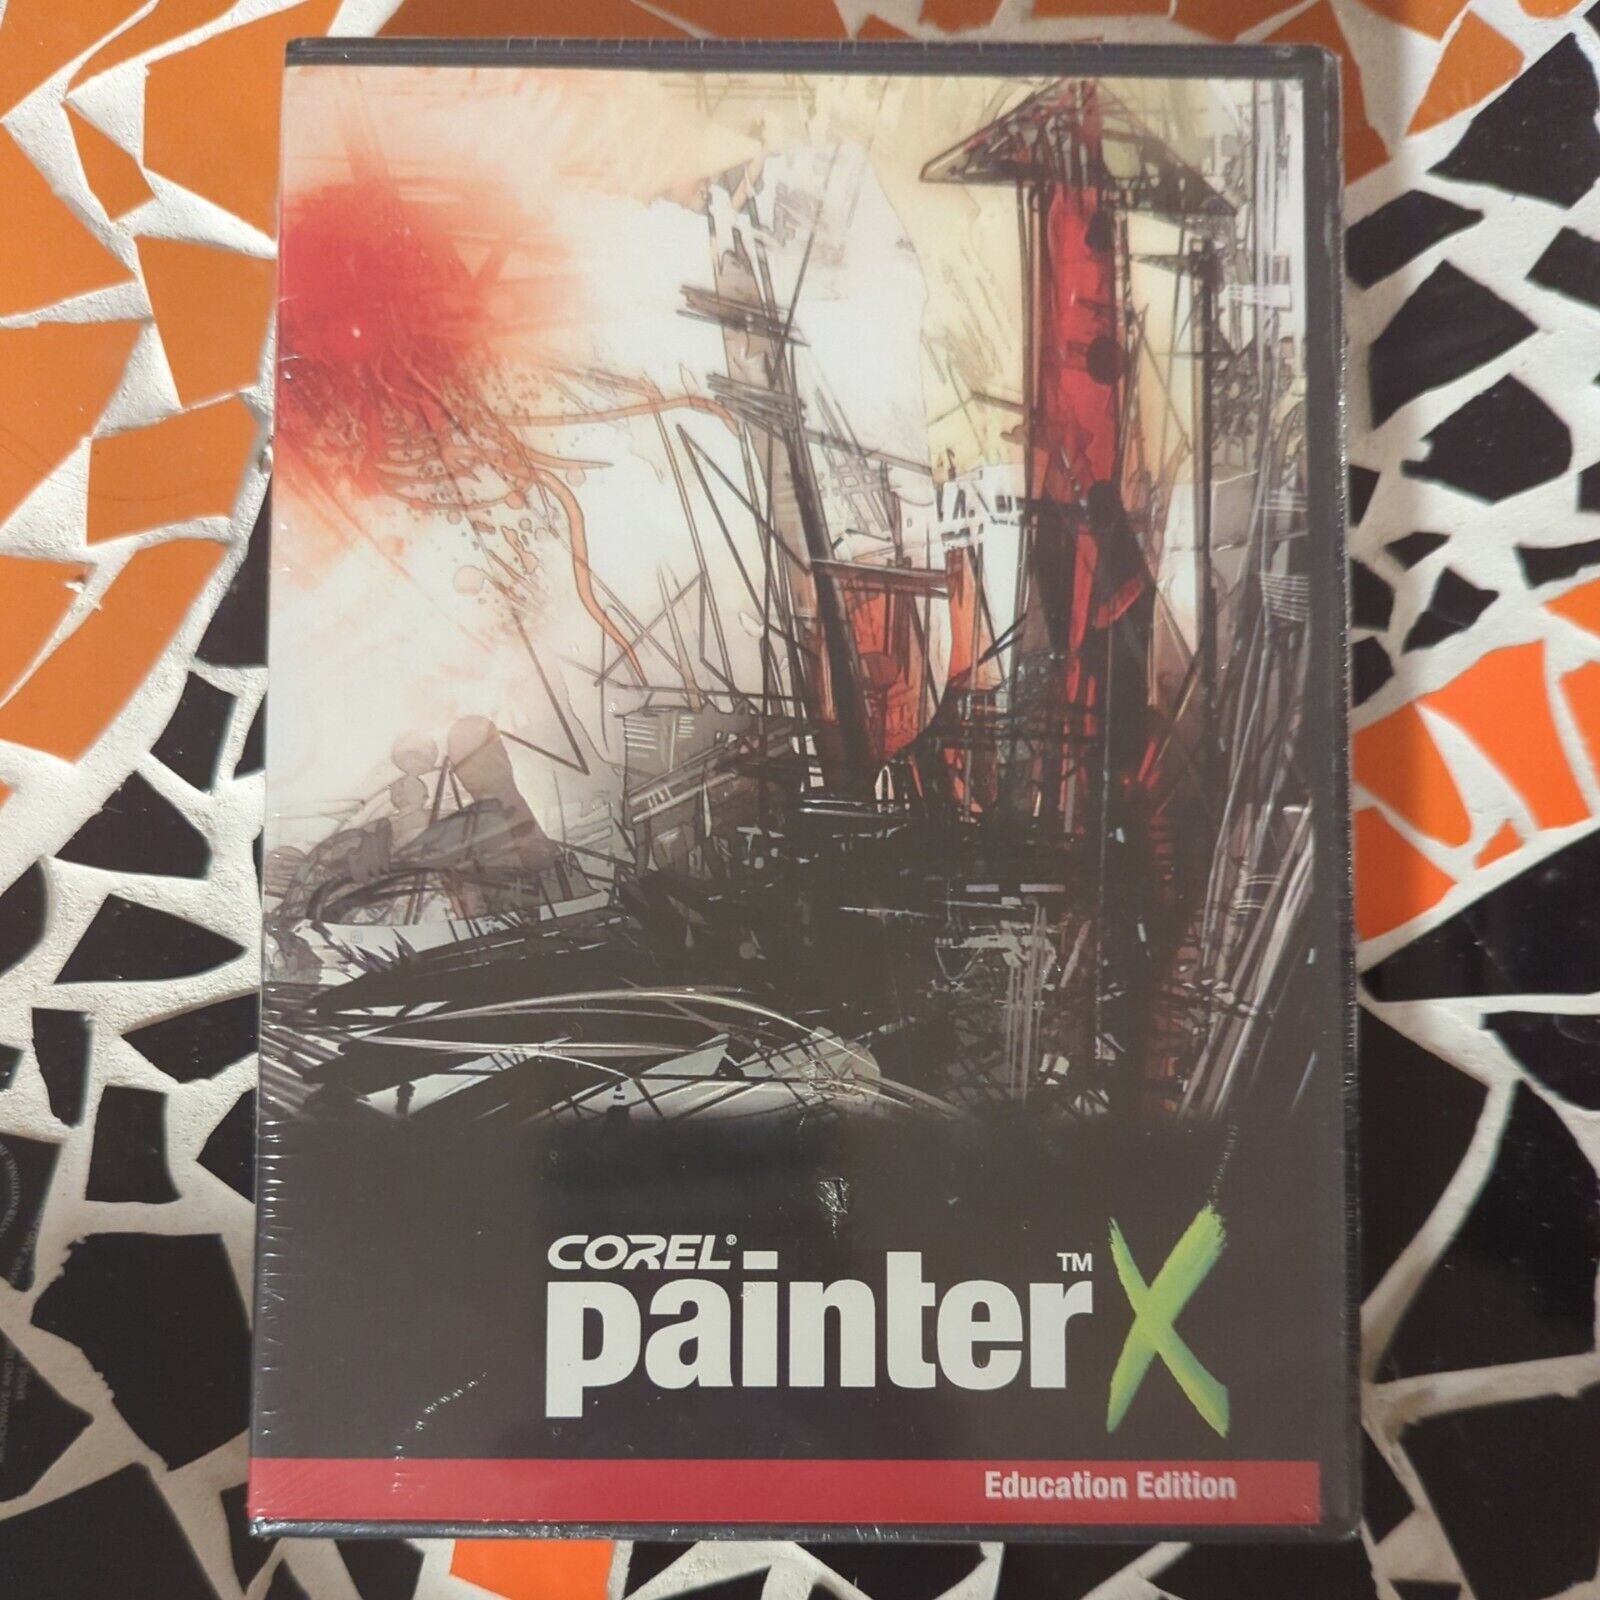 Corel-Painter X Education Edition NEW SEALED